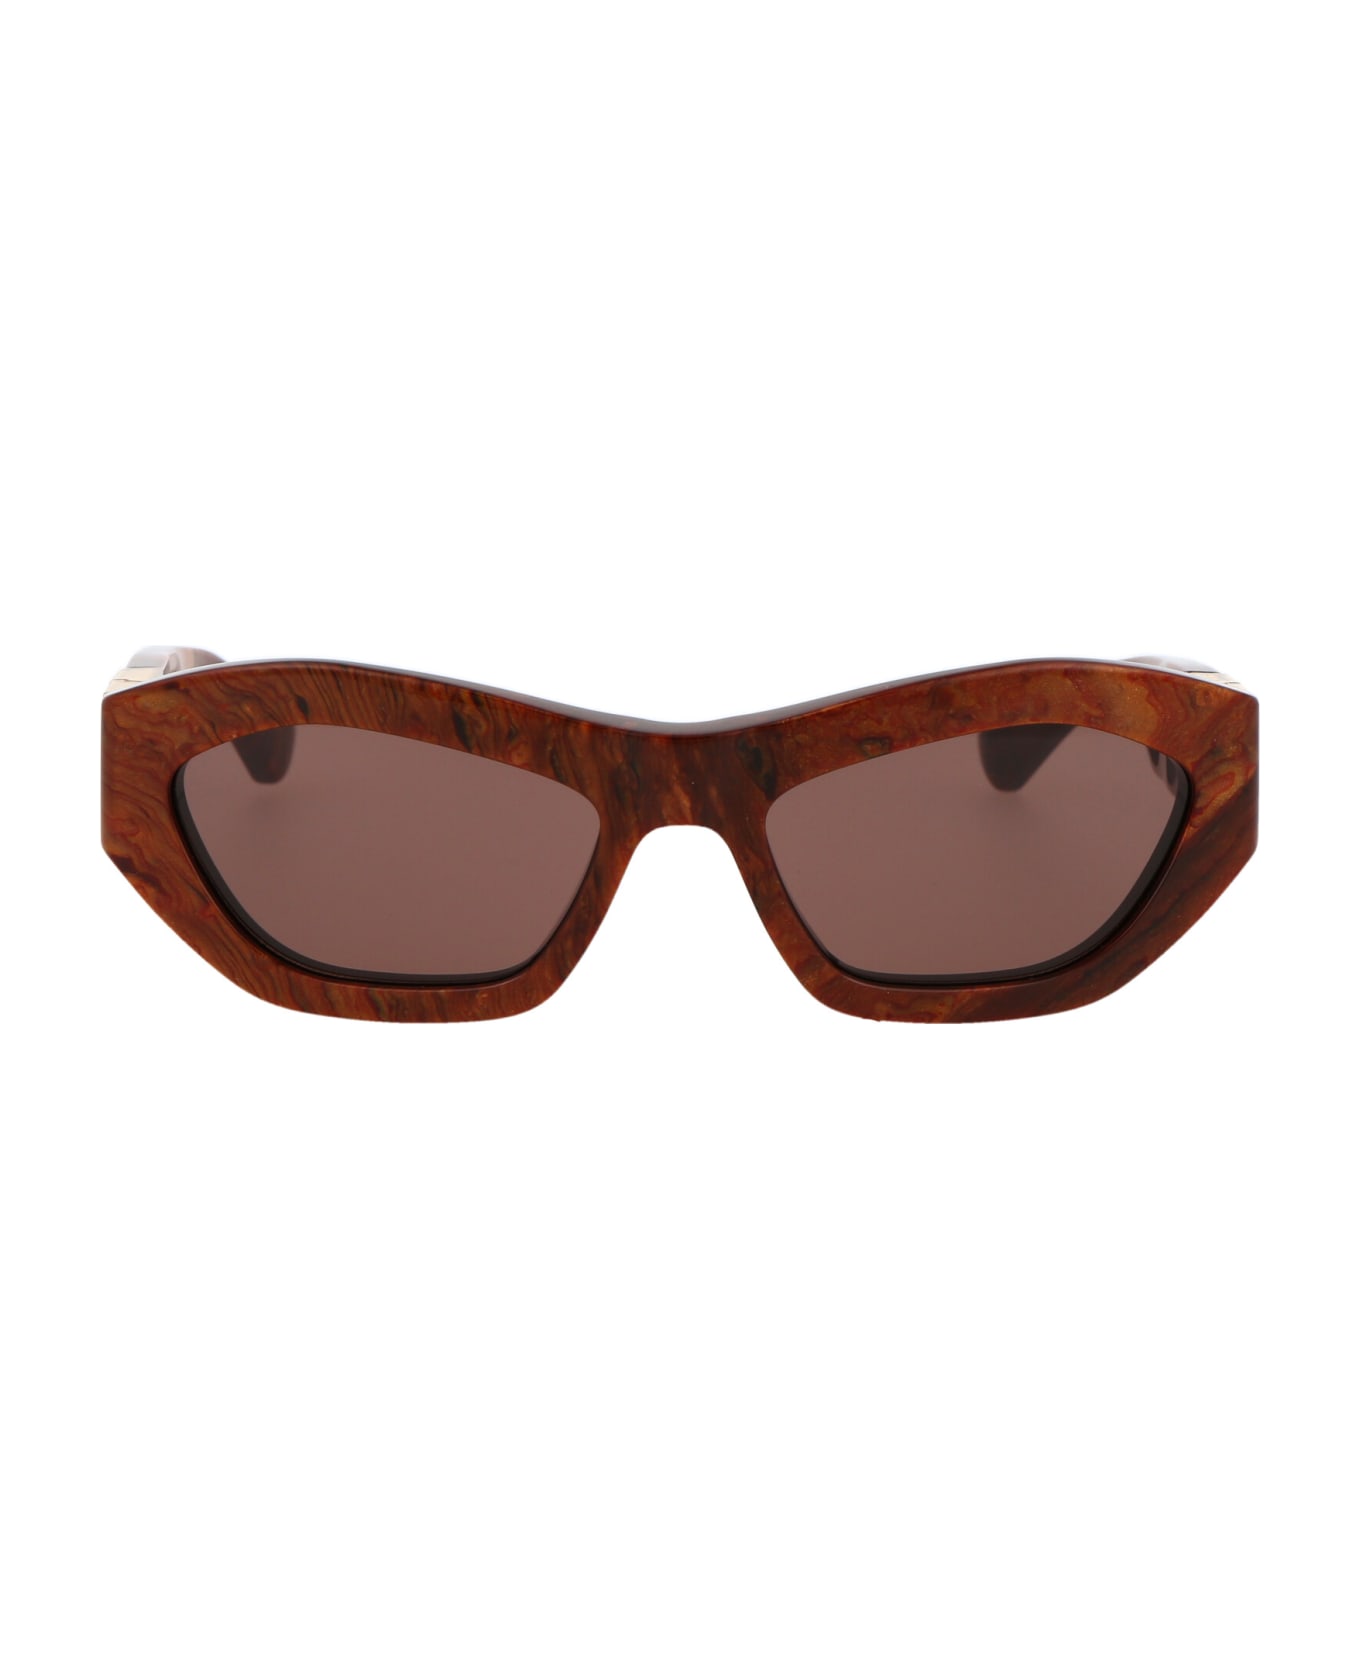 Bottega Veneta Eyewear Bv1221s Sunglasses - 005 BROWN BROWN BROWN